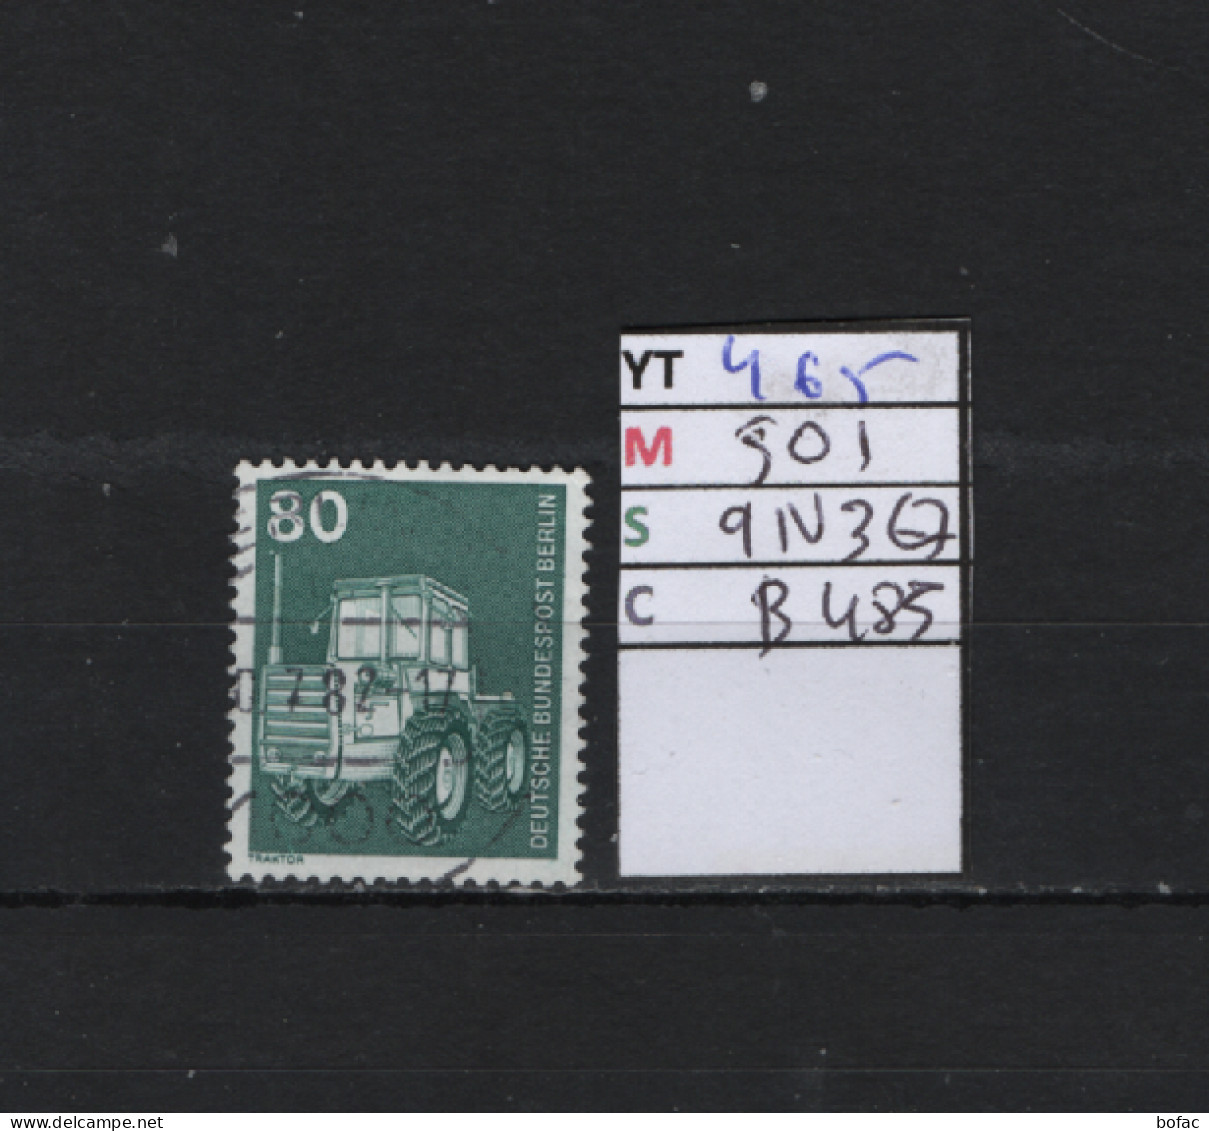 P. FIXE Obl 465 YT 501 MIC 9N367 SCO B485 GIB Tracteur Industrie Et Technique 1975 1976 *Berlin* 75/03 - Used Stamps